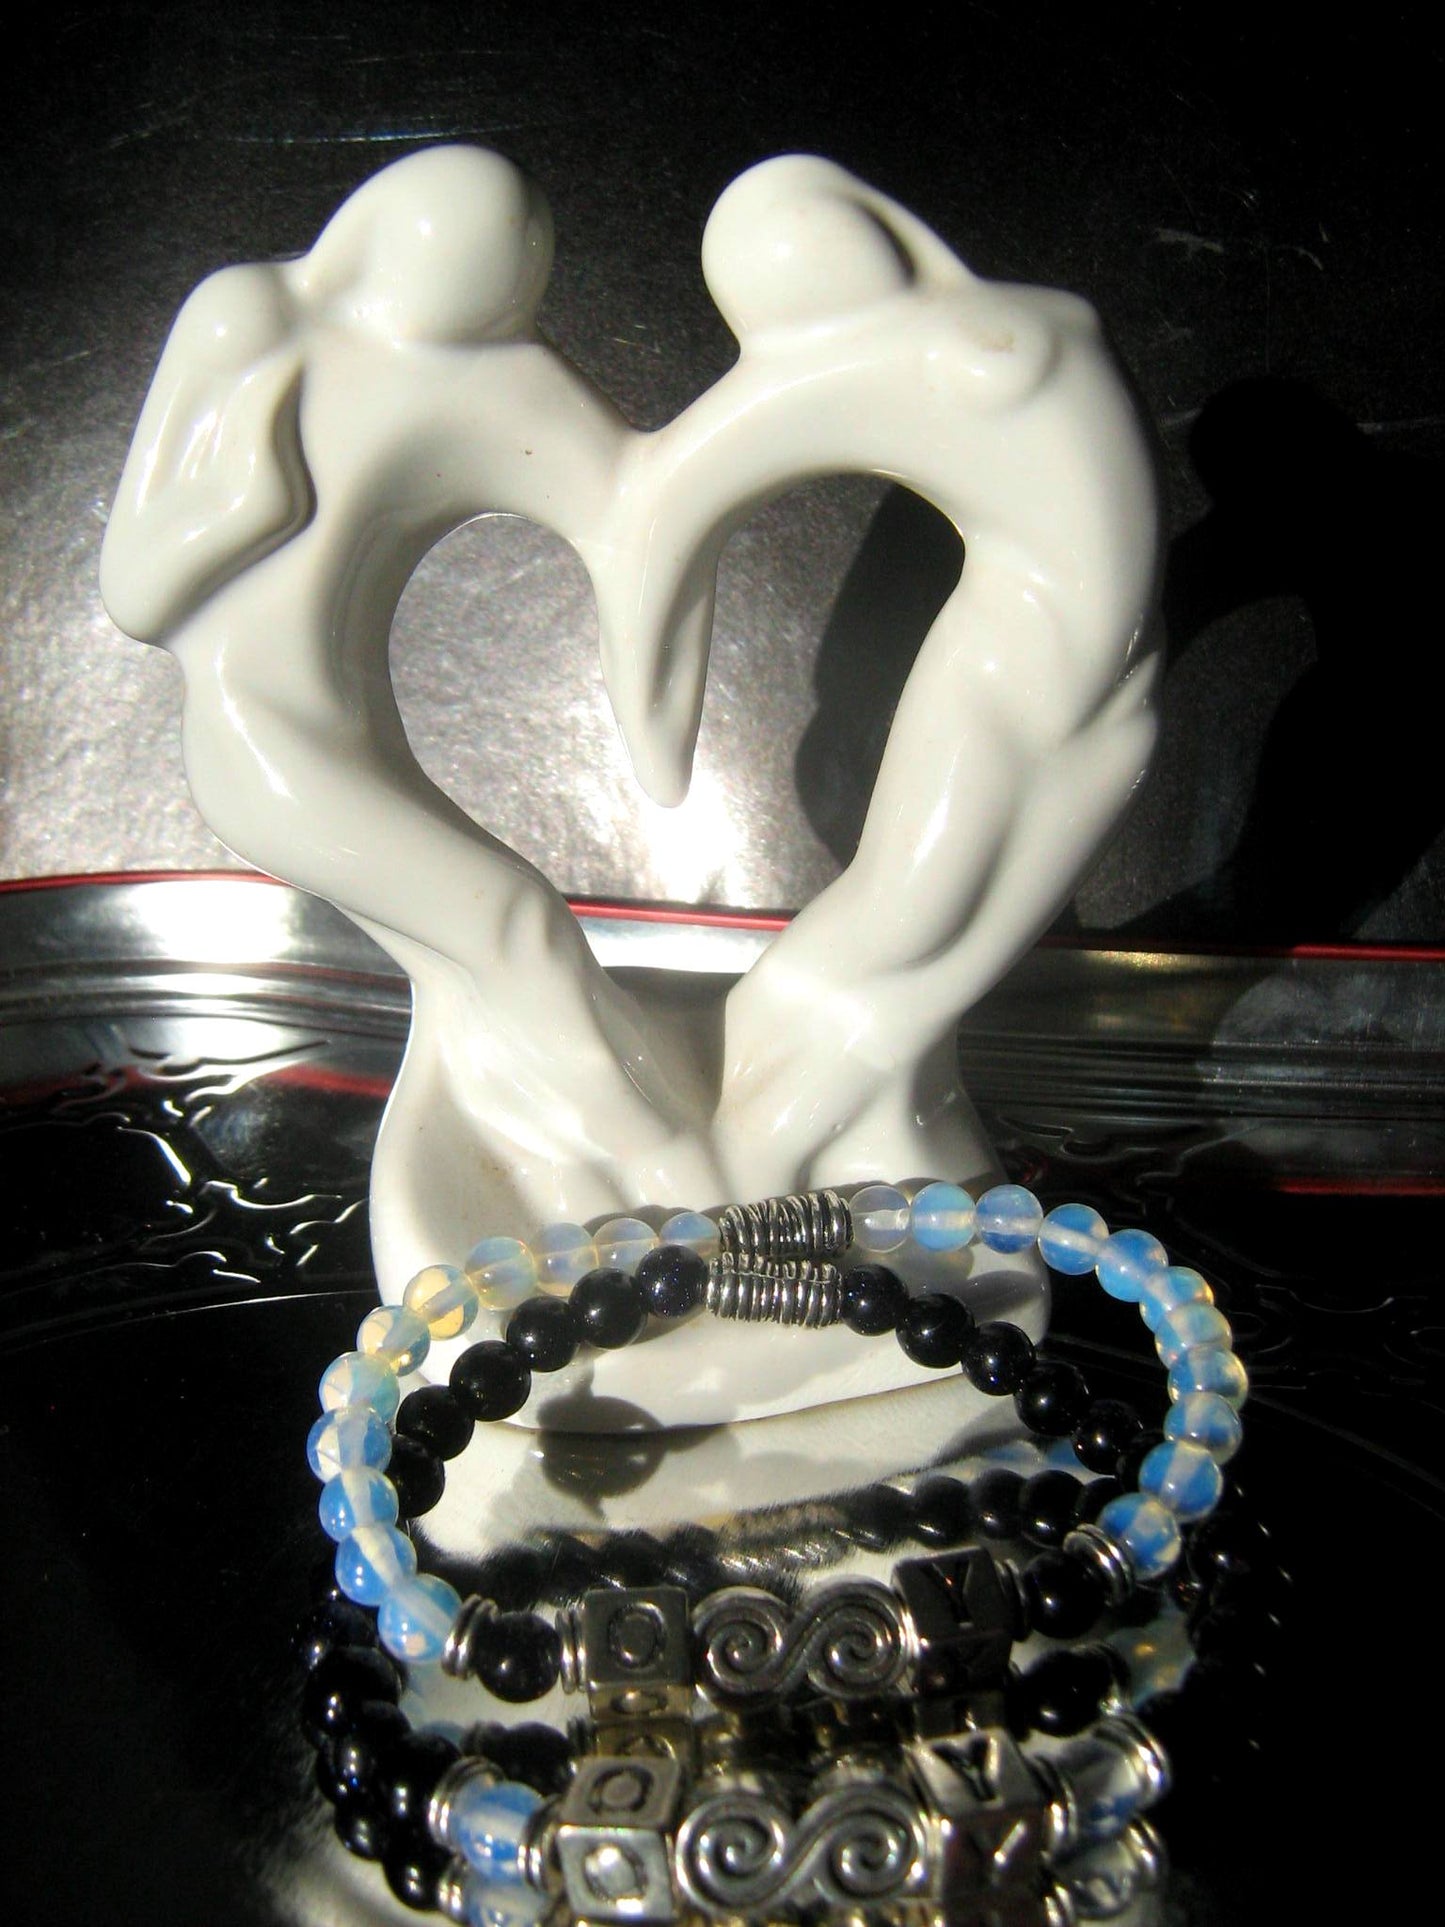 COUPLE Infinity custom stone BRACELETS, Engagement Handmade gemstone bracelets men women couple gift